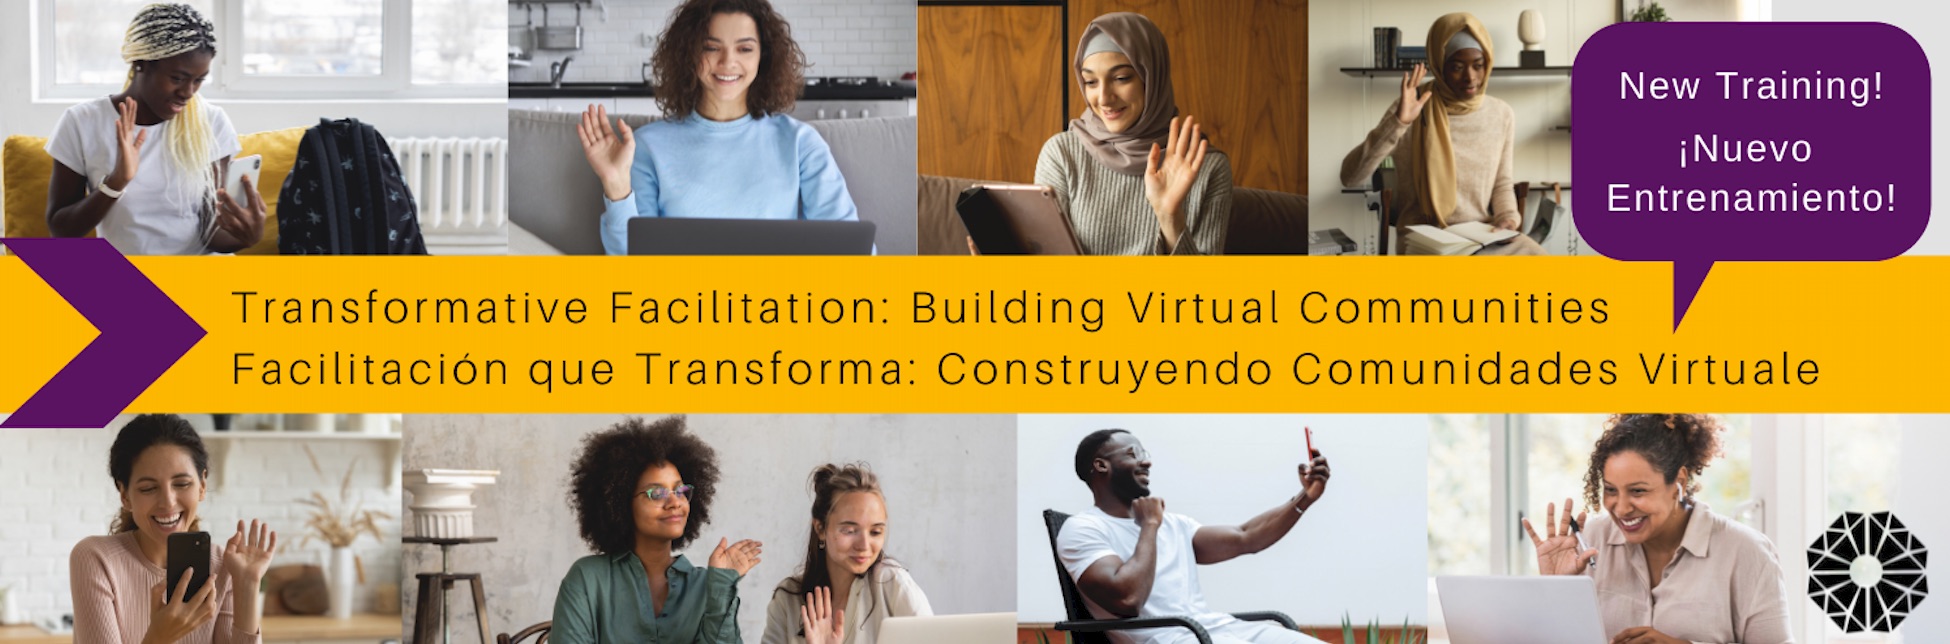 Transformative Facilitation: Building Virtual Communities Webinar